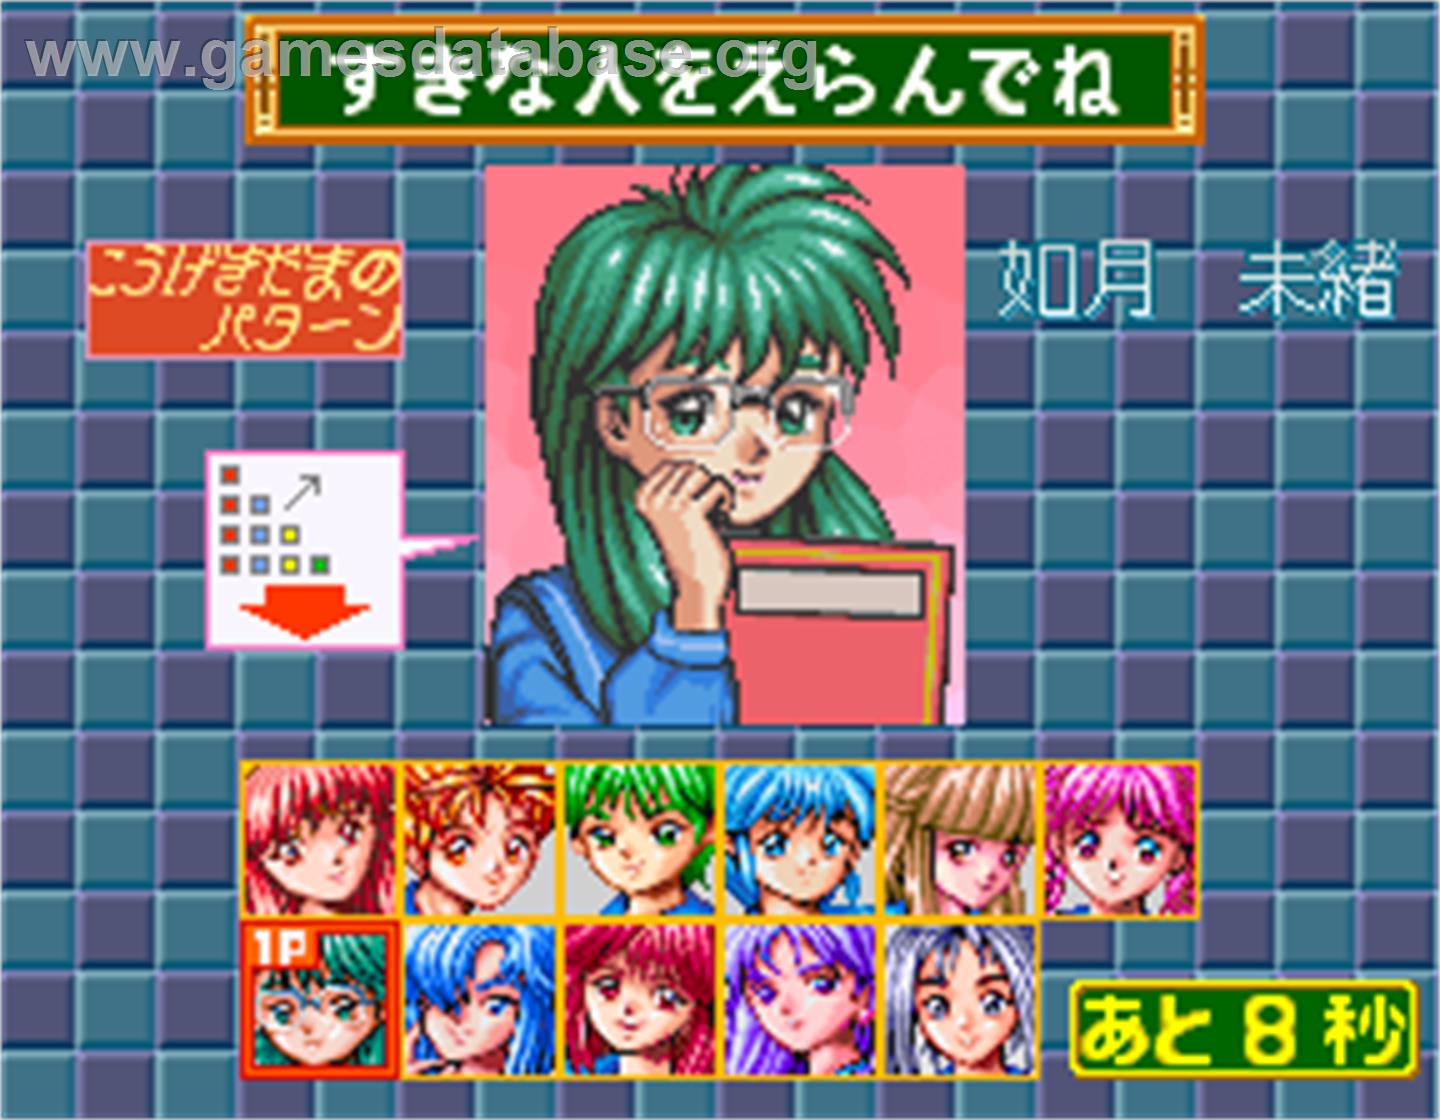 Tokimeki Memorial Taisen Puzzle-dama - Arcade - Artwork - Select Screen